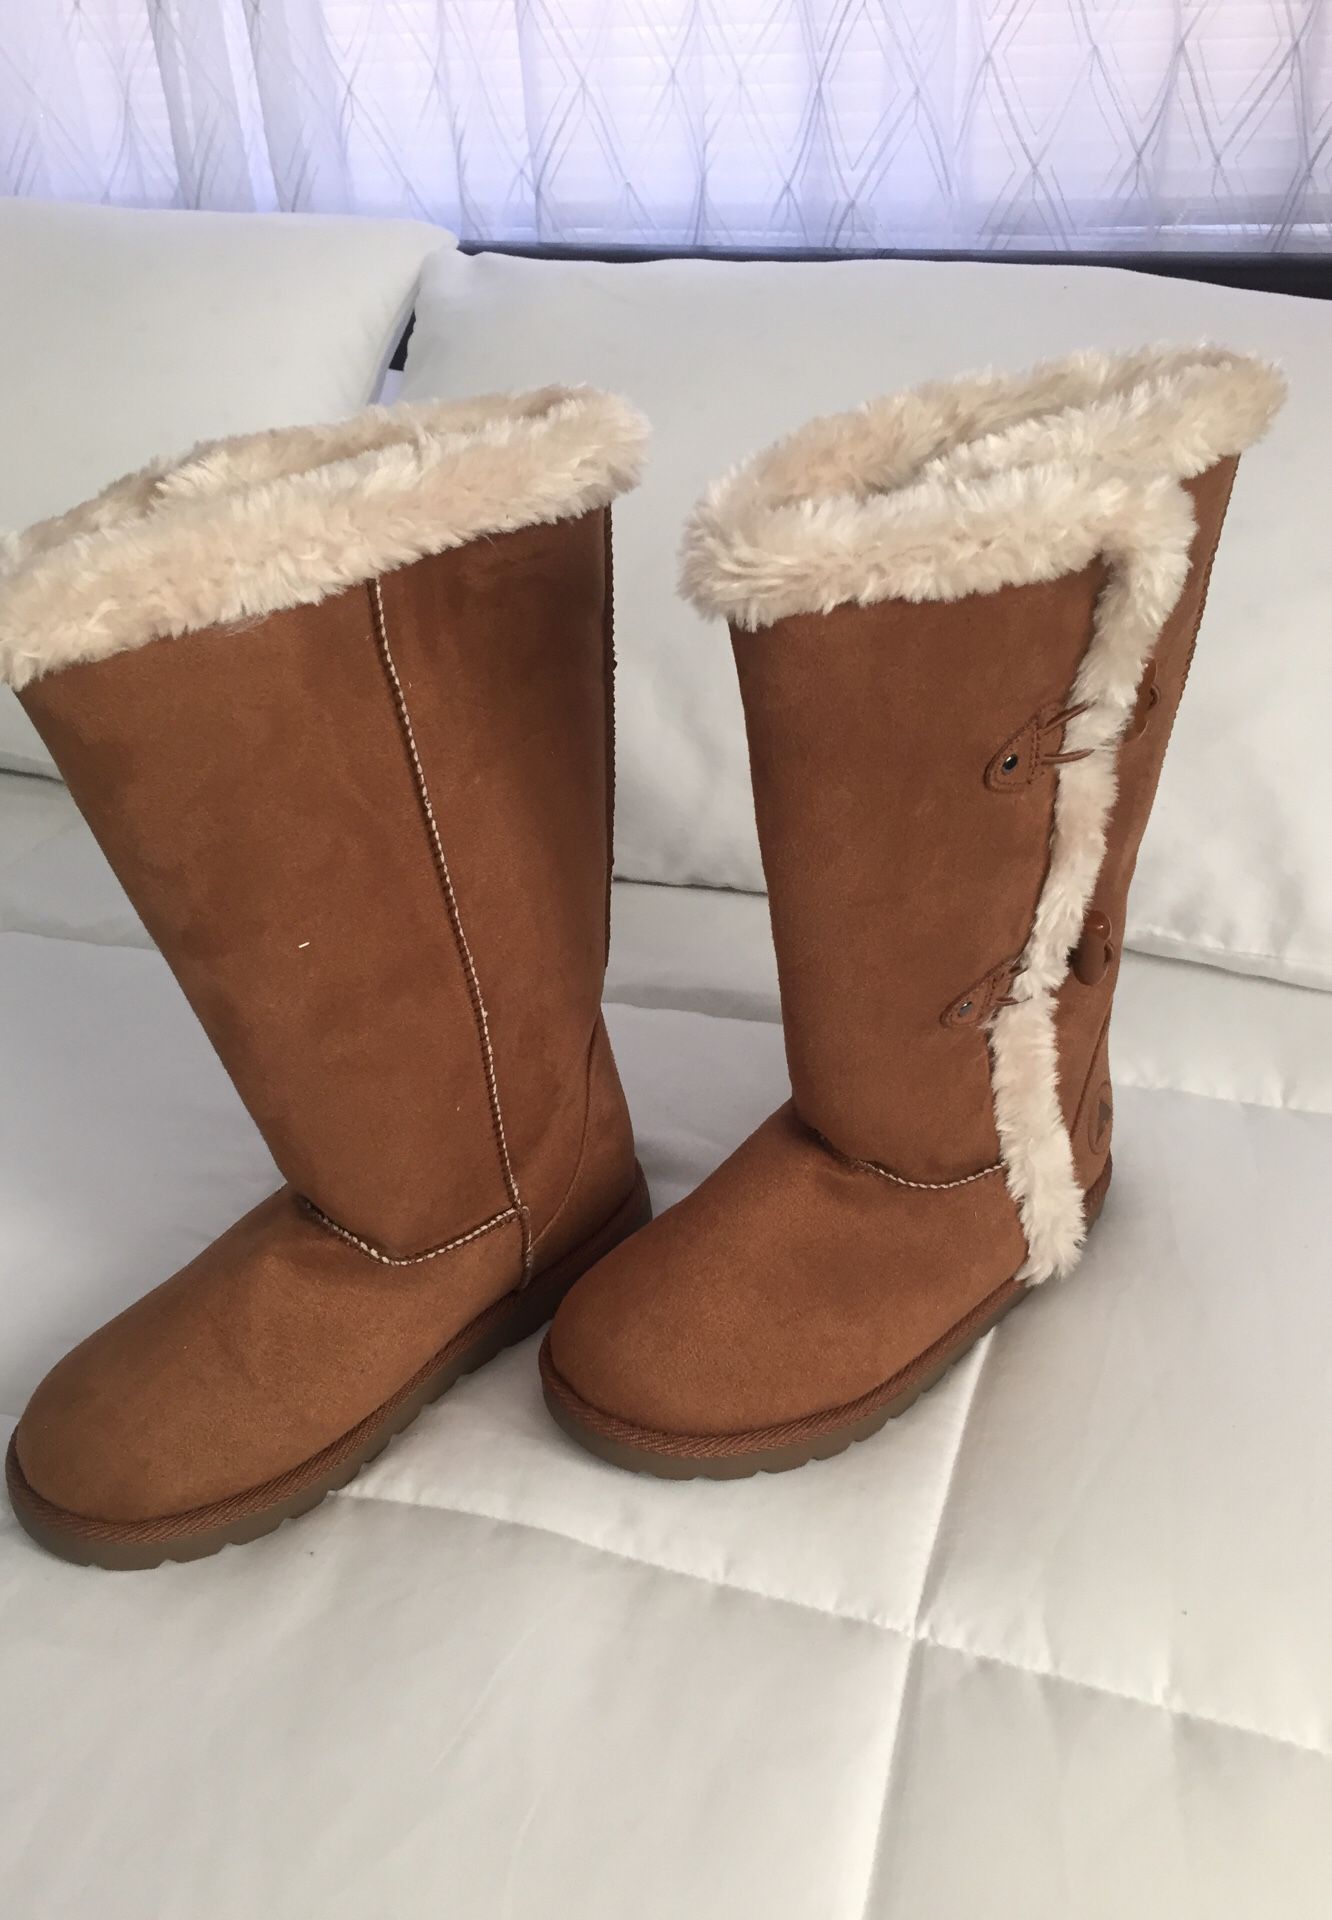 Girls Warm Boots BRAND NEW. Size 3 1/2